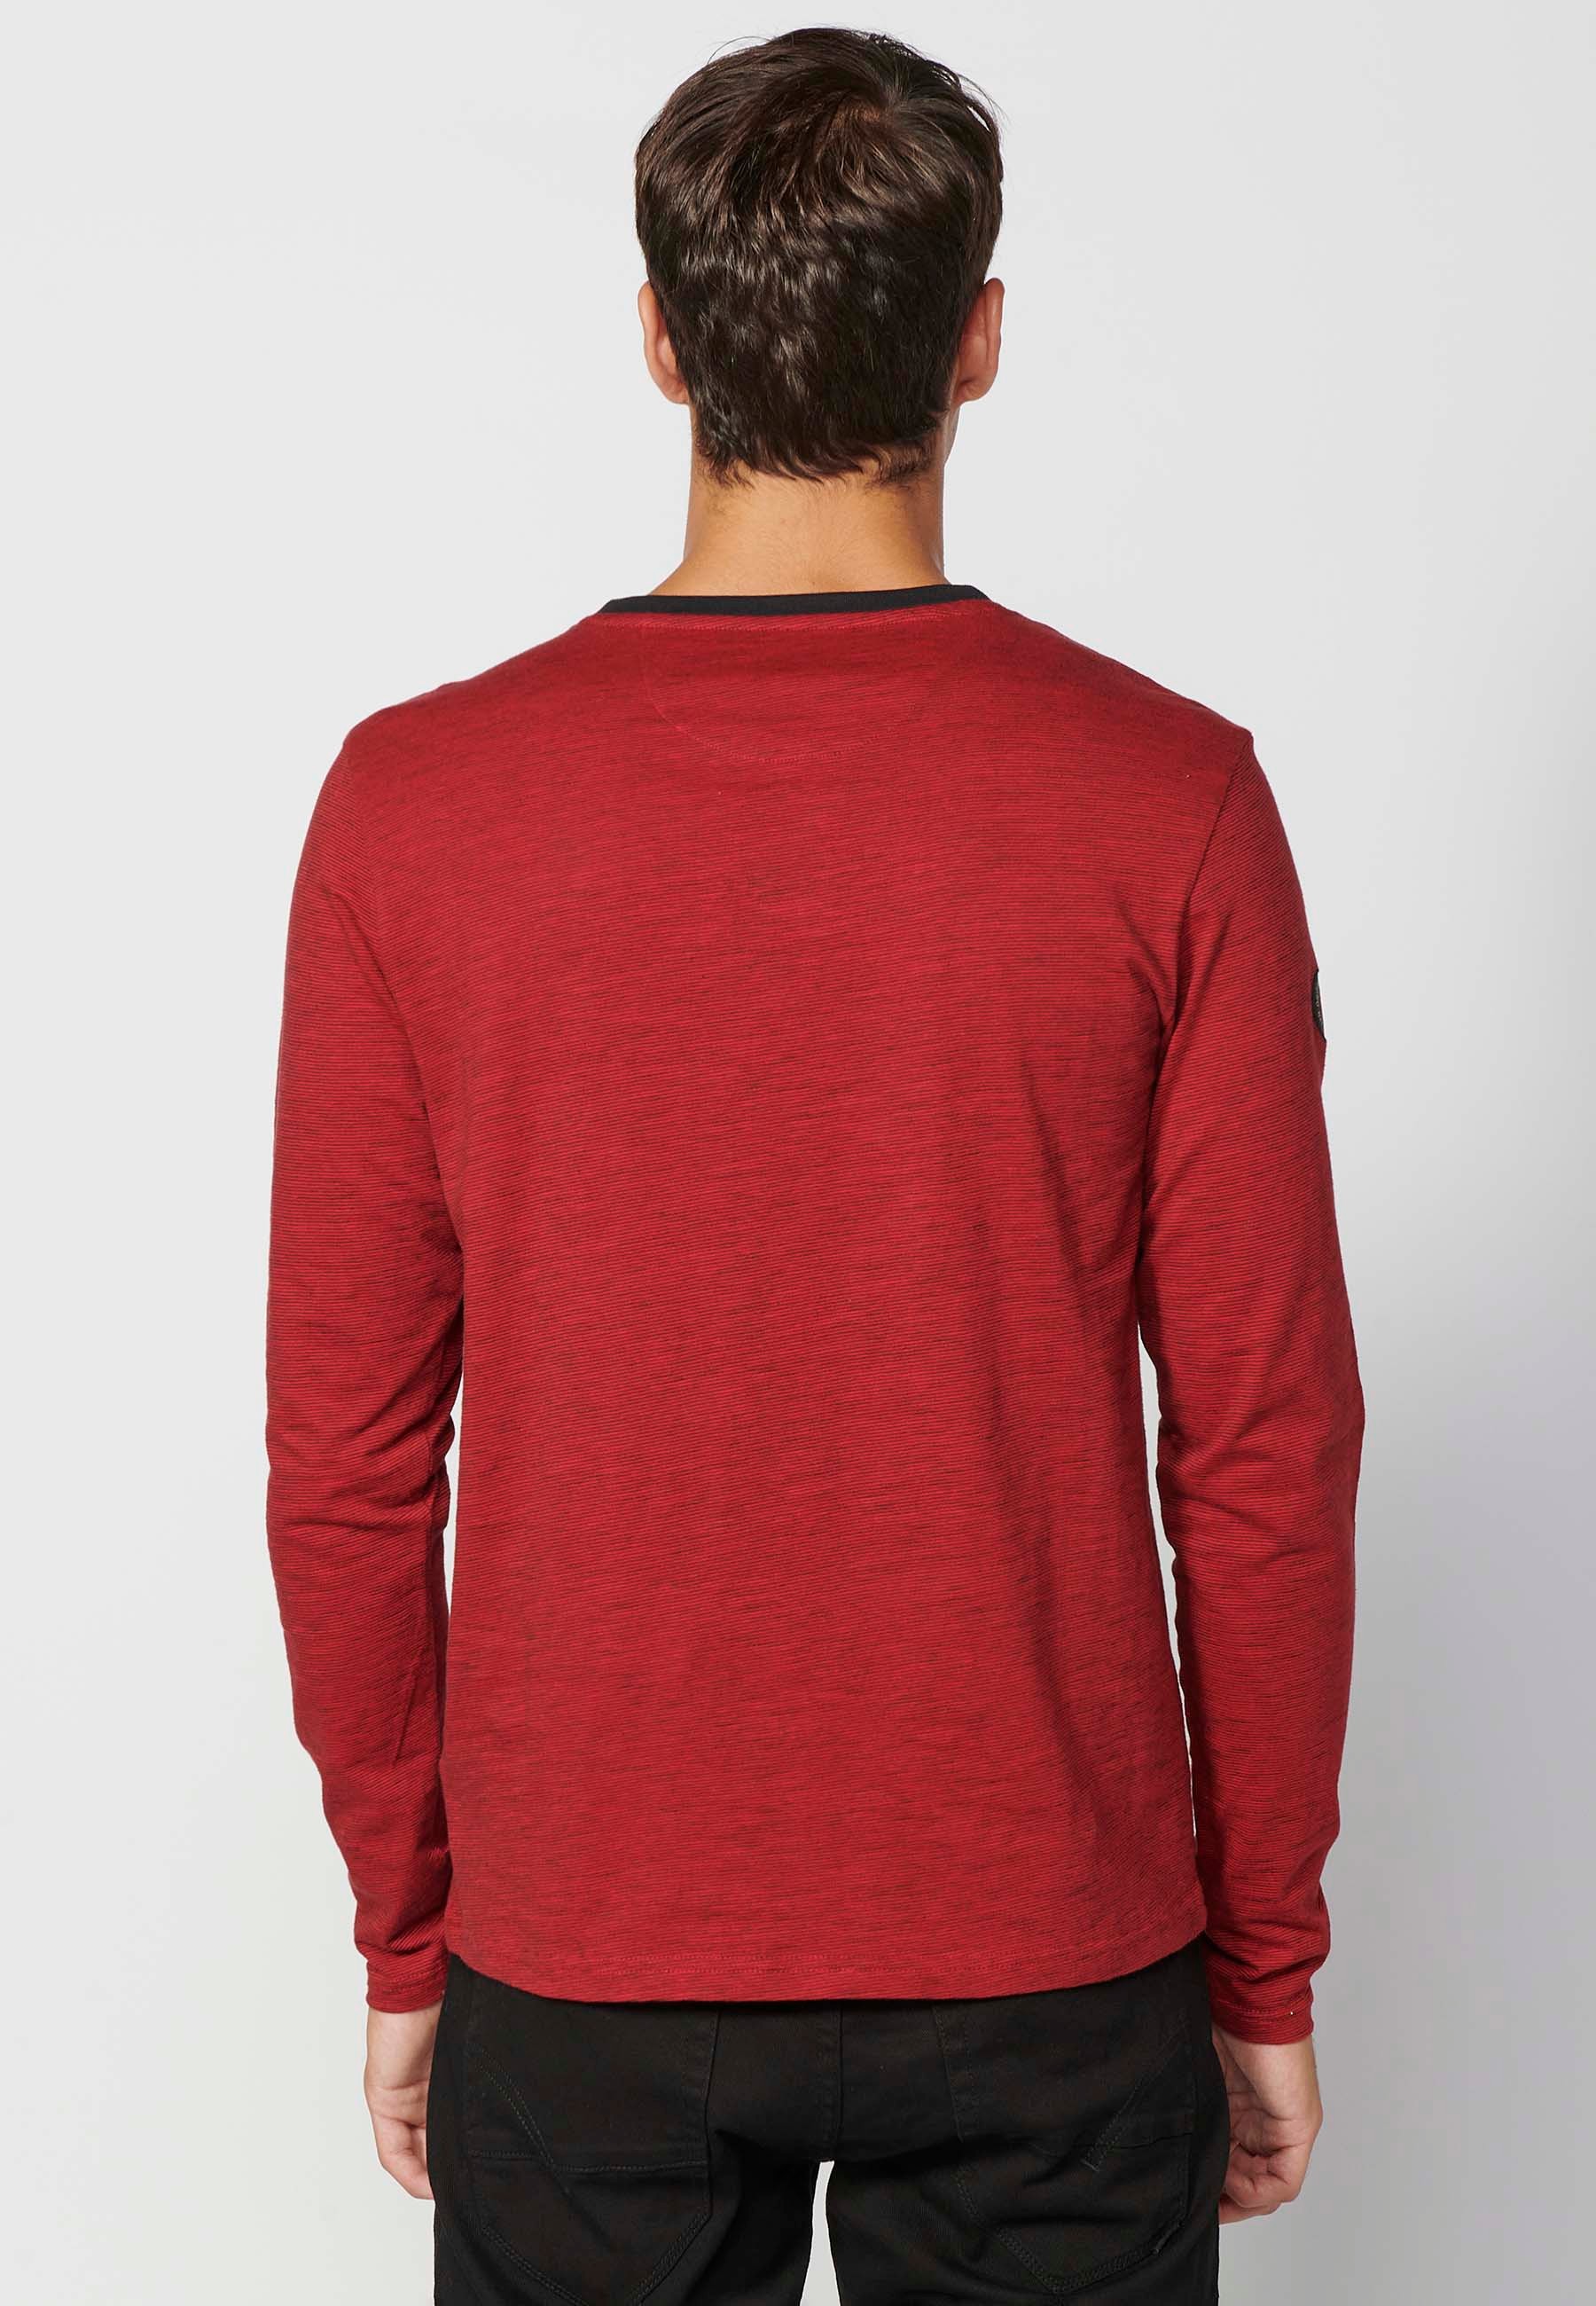 Camisetas de hombre manga larga Color Rojo Tallas M, compra online